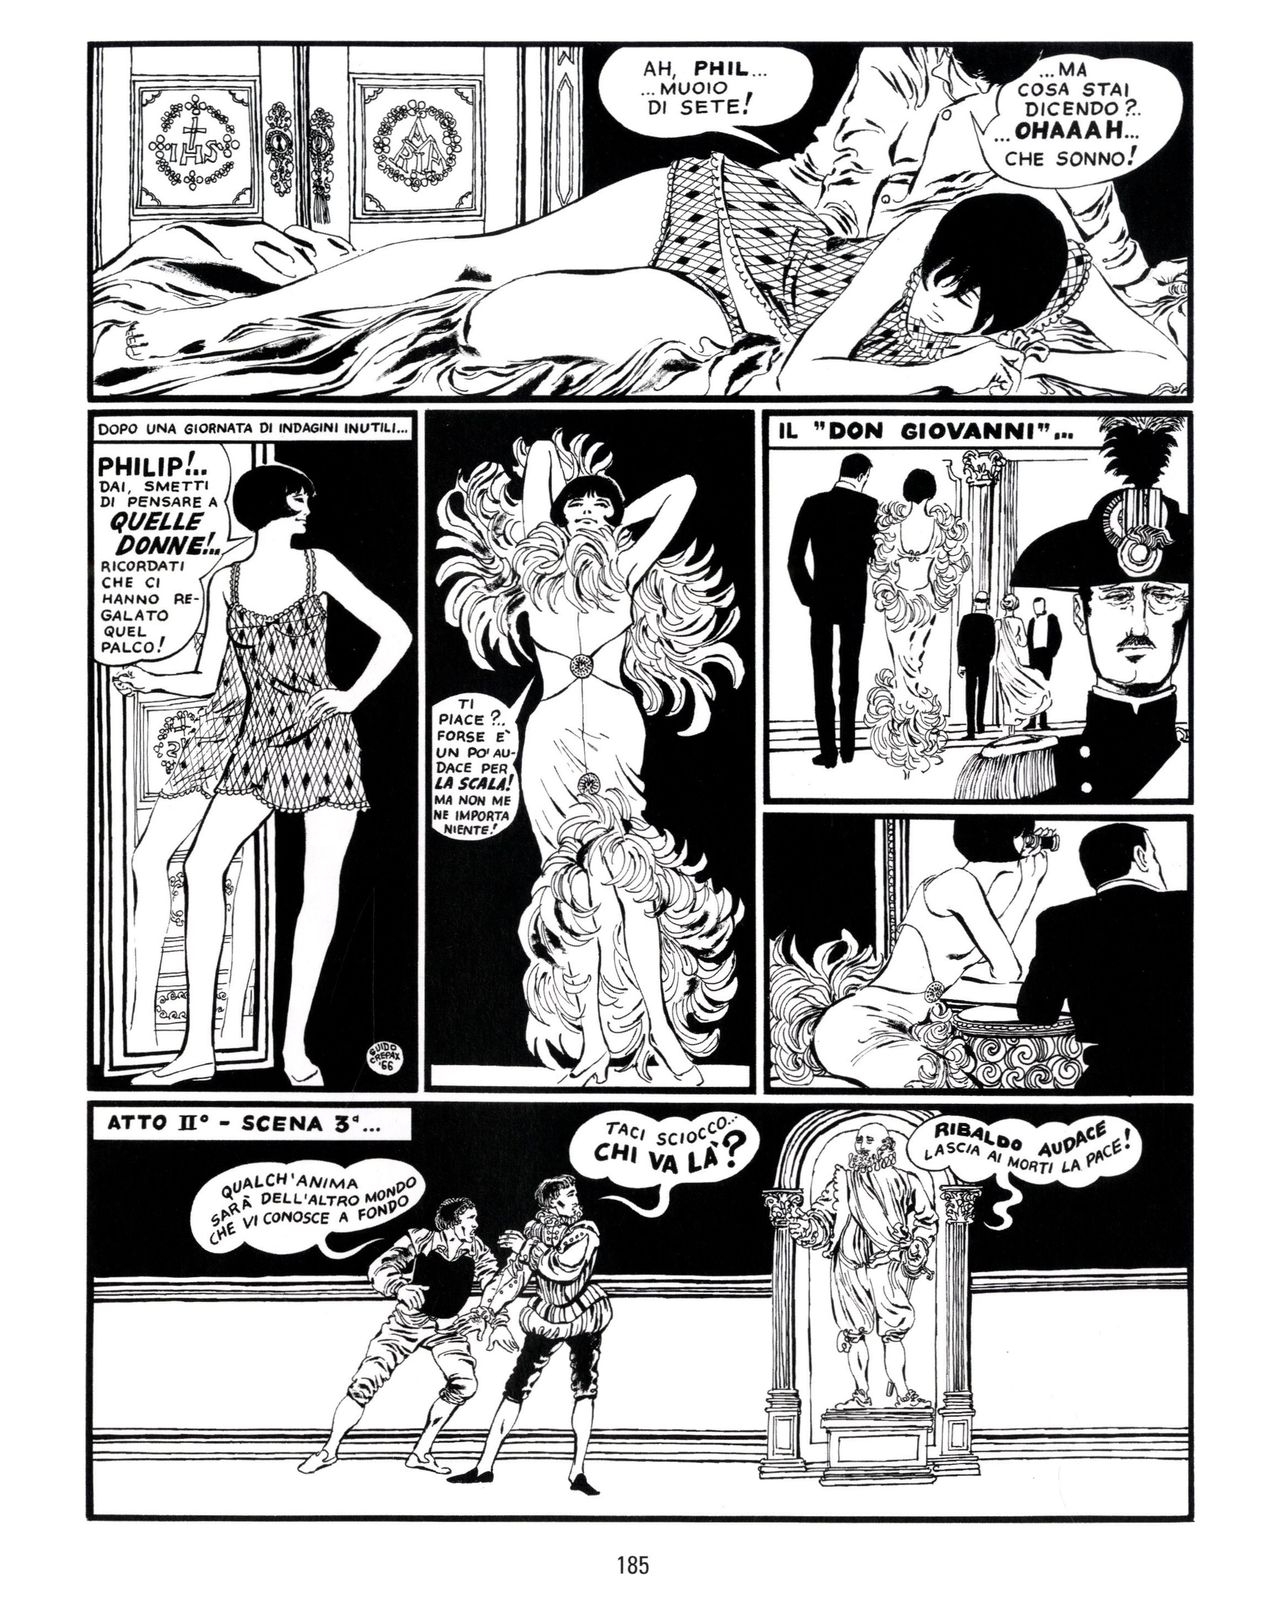 [Guido Crepax] Erotica Fumetti #25 : L'ascesa dei sotterranei : I cavalieri ciechi [Italian] 186